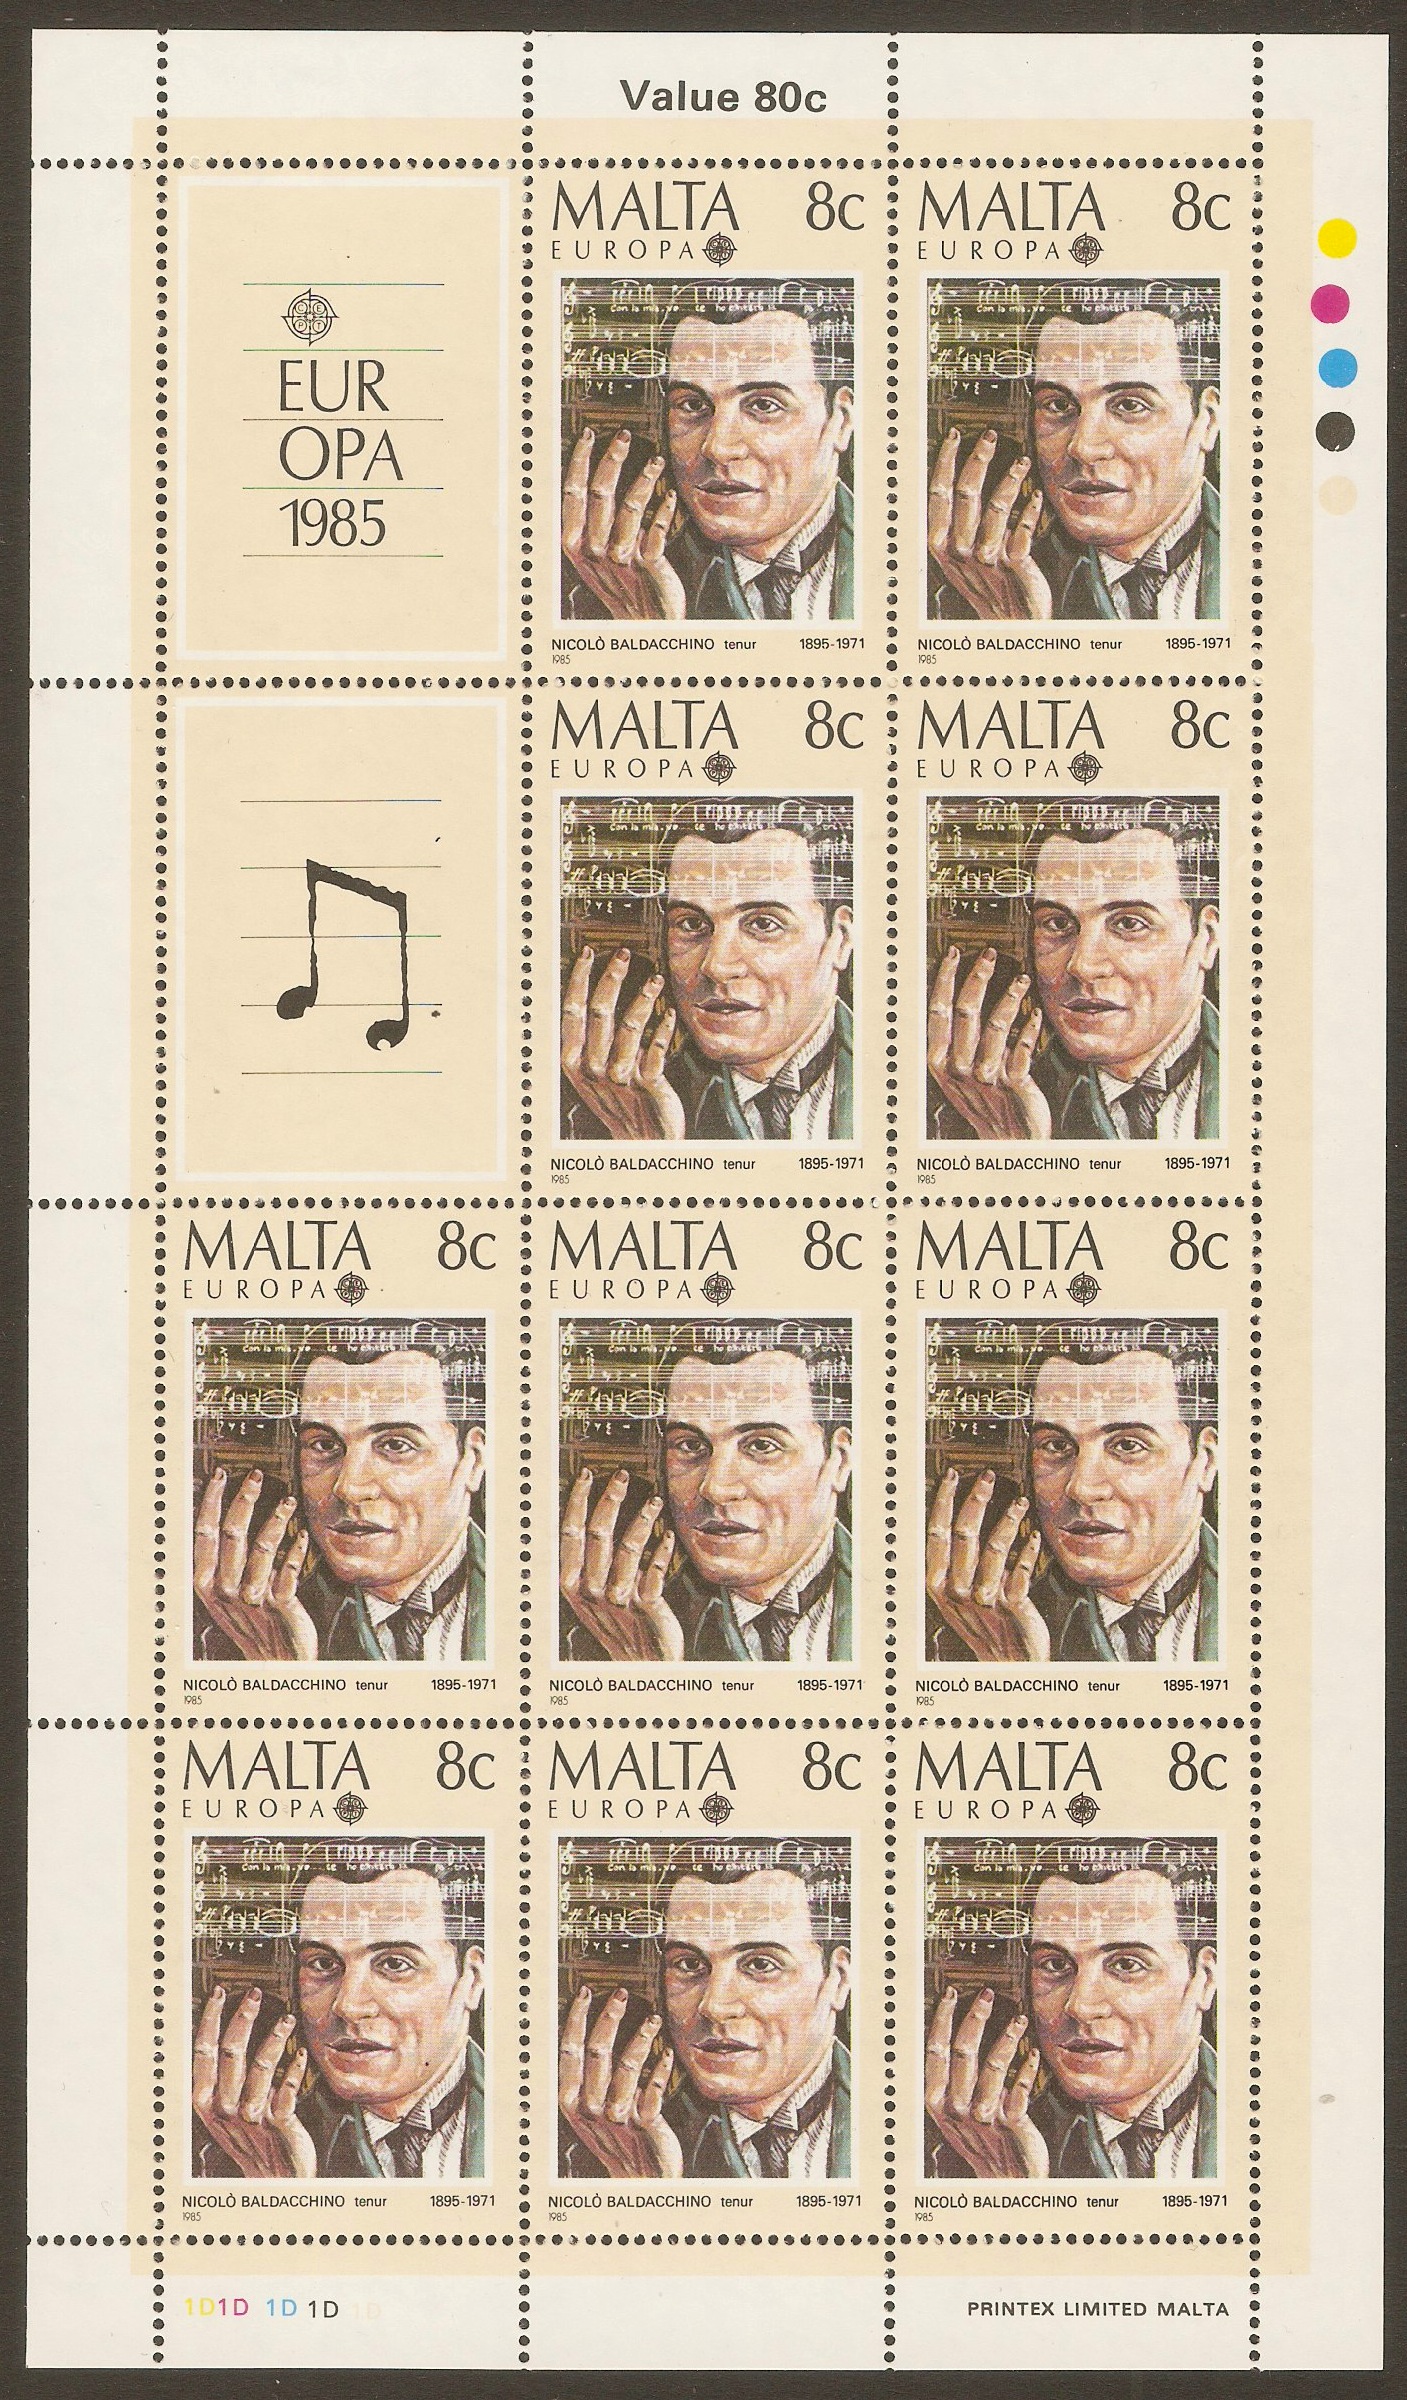 Malta 1984 8c Europa - Music Year stamp. SG759.